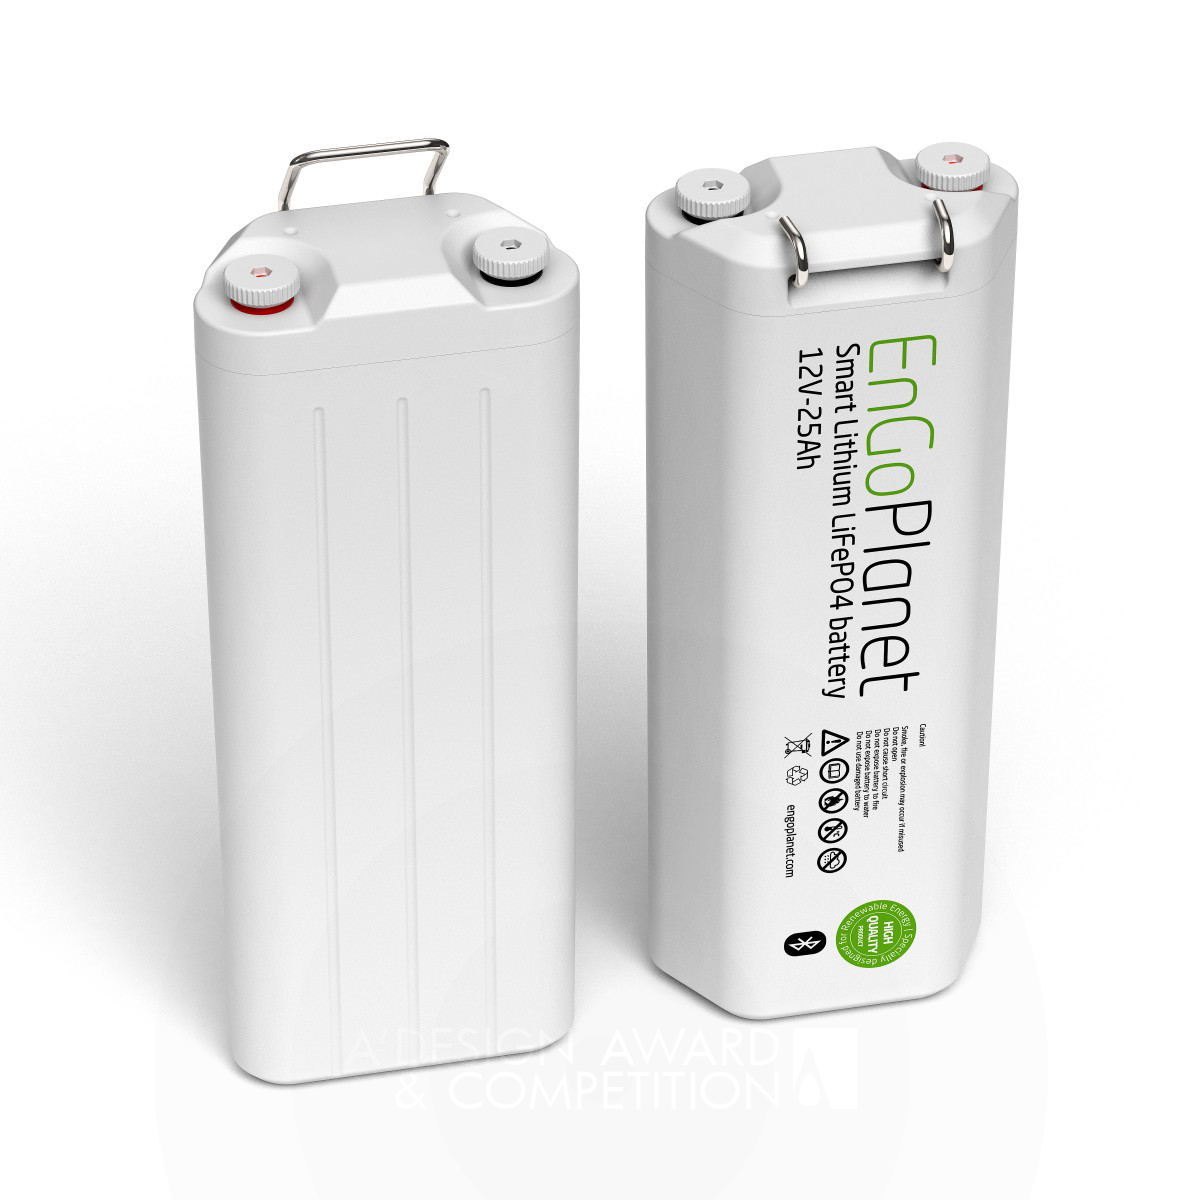 Good Battery Case Design